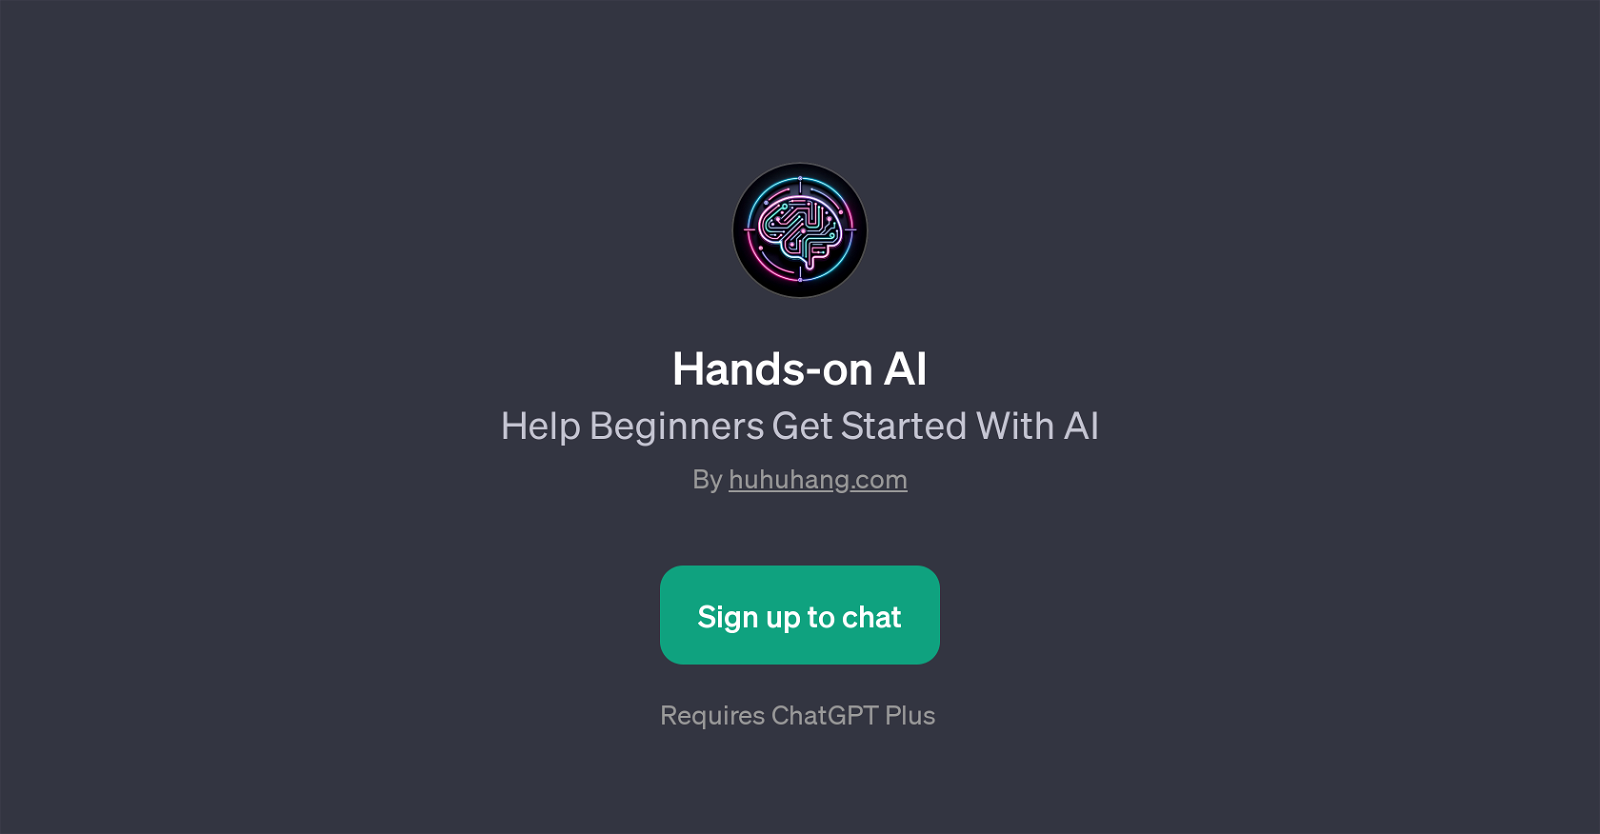 Hands-on AI website